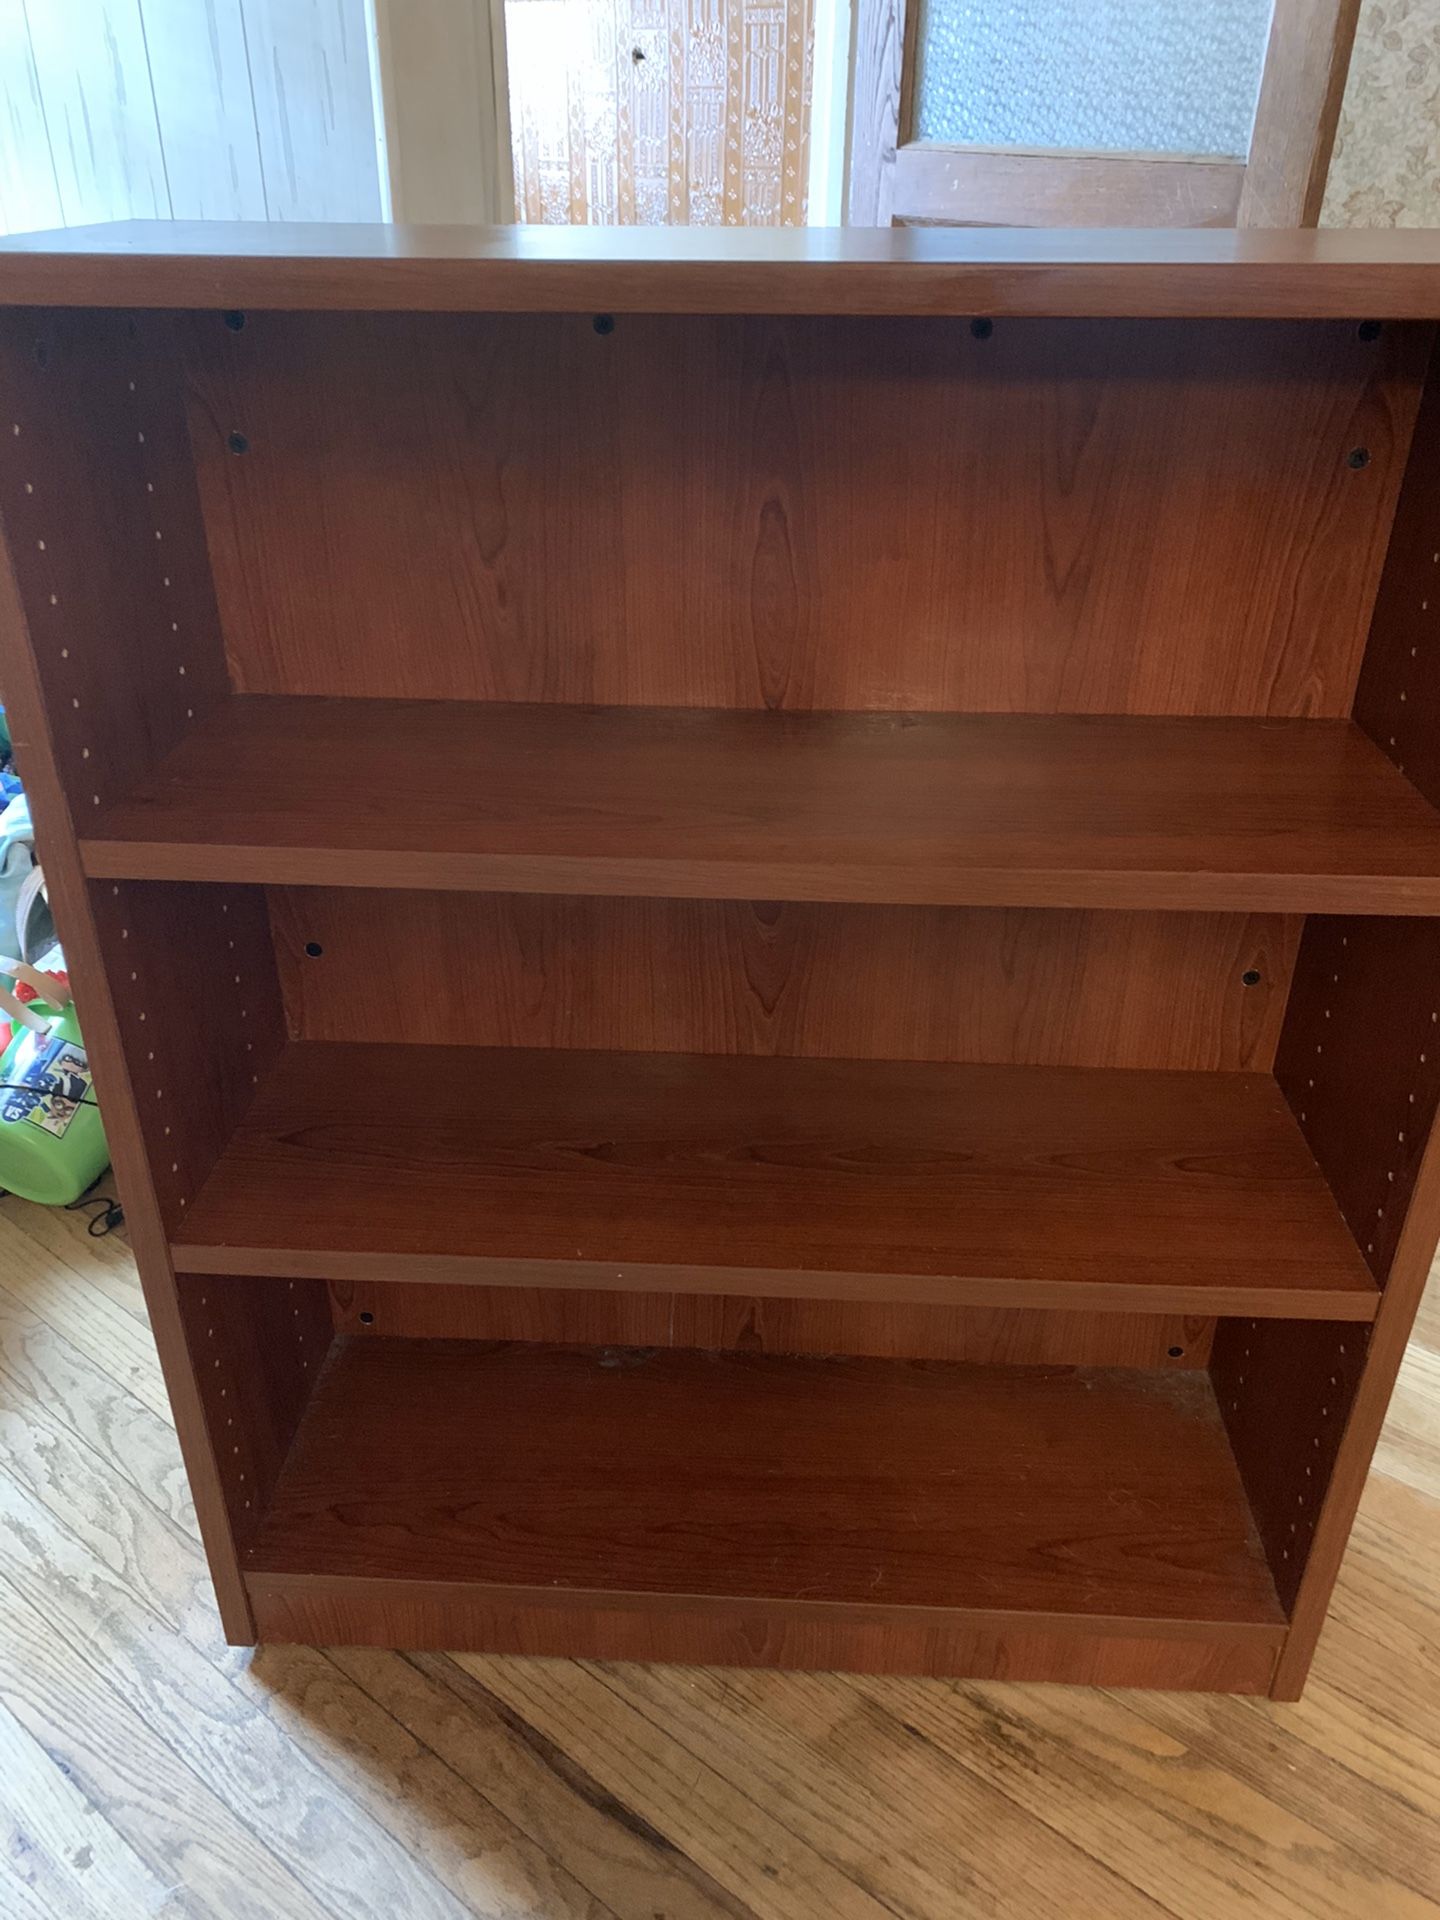 2 Bookshelves Good condition $75